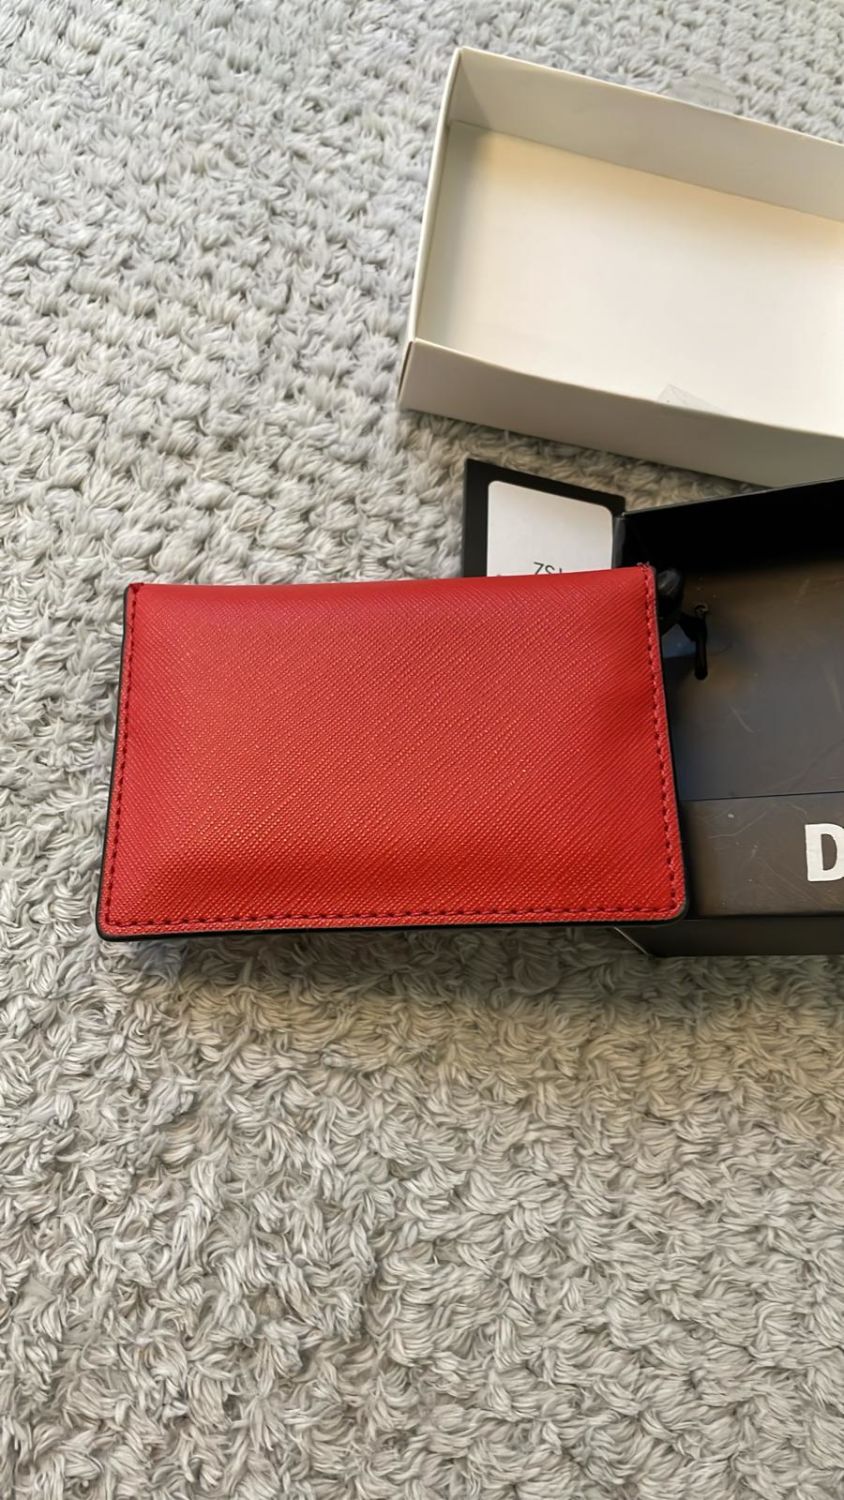 DKNY card holder - Image 2 of 2